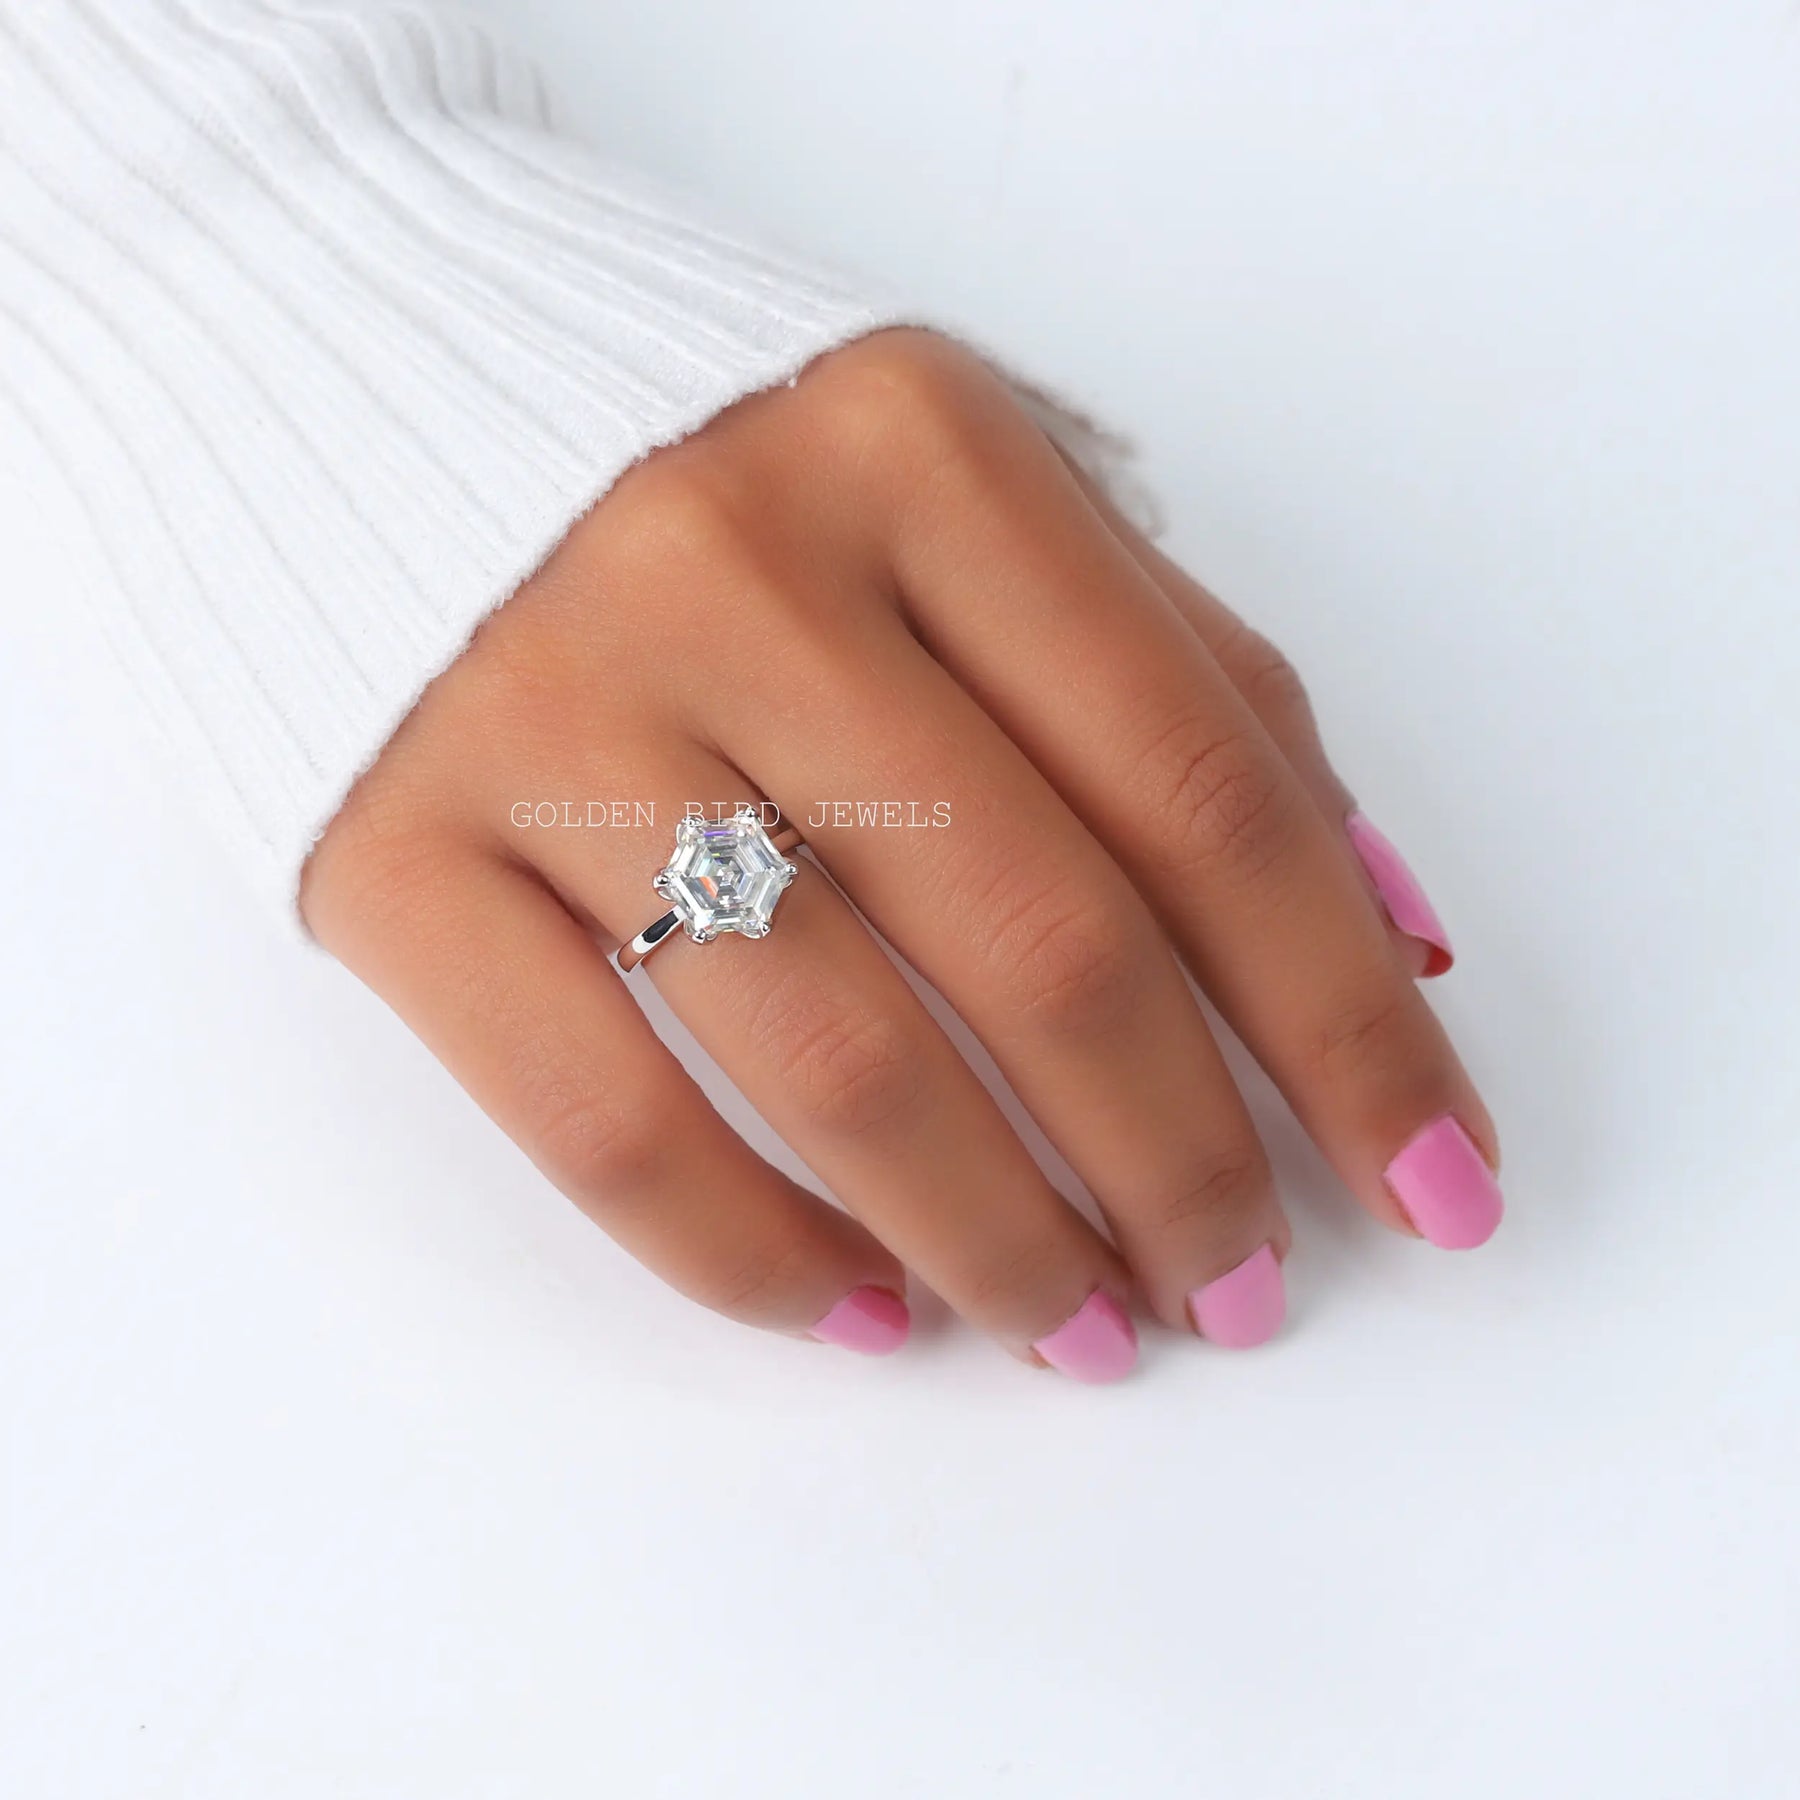 [Solitaire Moissanite Engagement Ring Made Of Hexagon Cut]-[Golden Bird Jewels]